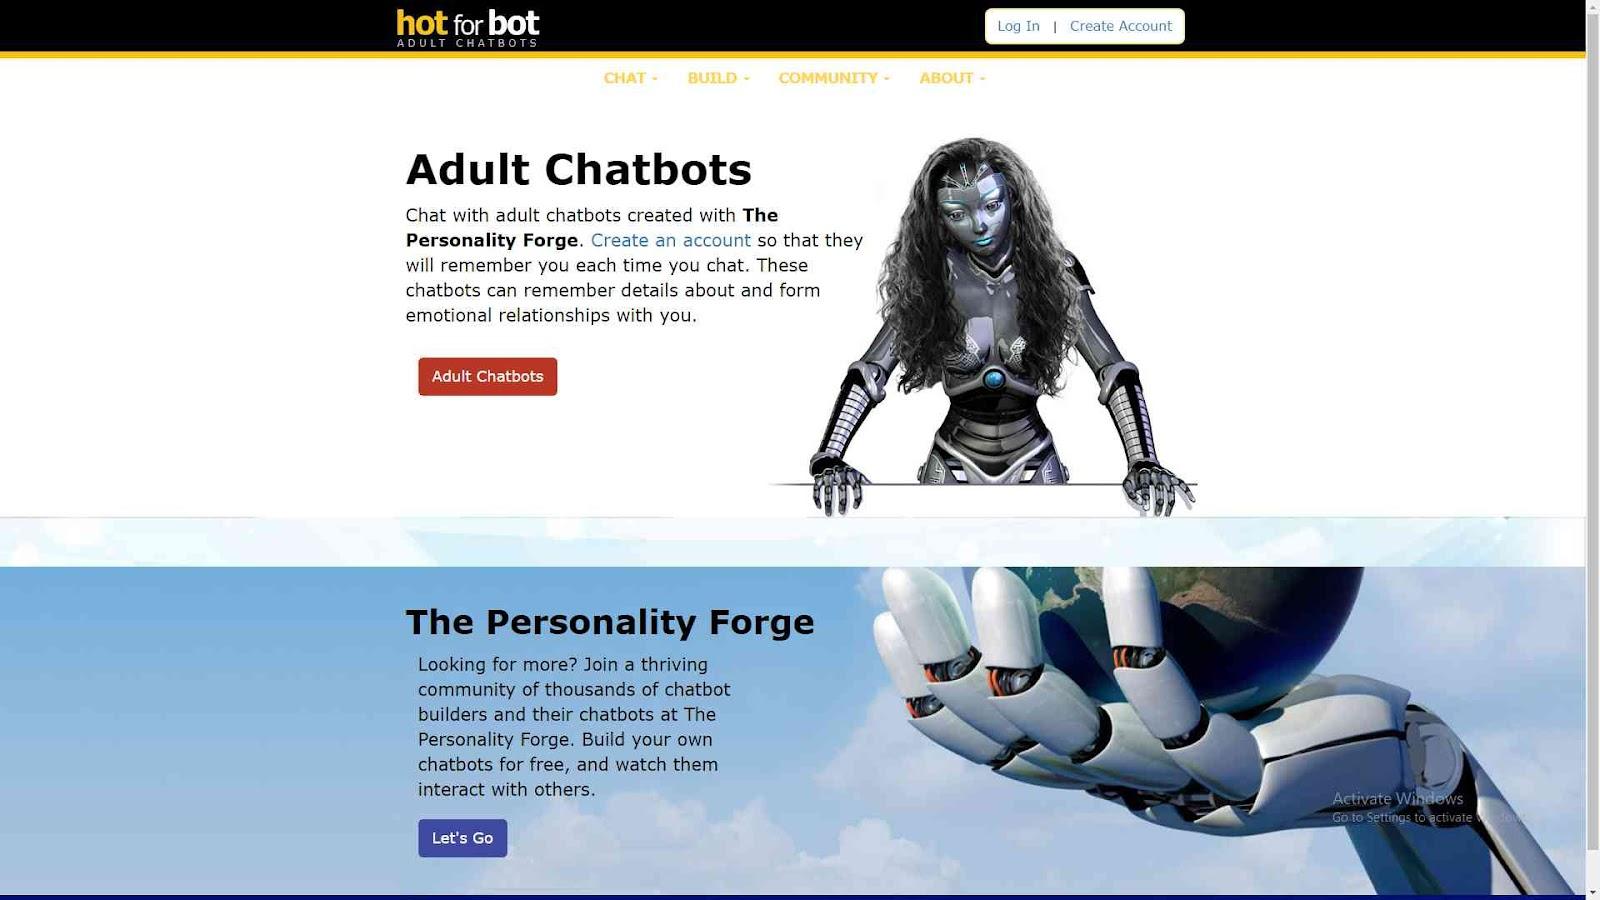 hotforbot – Adult Chatbots